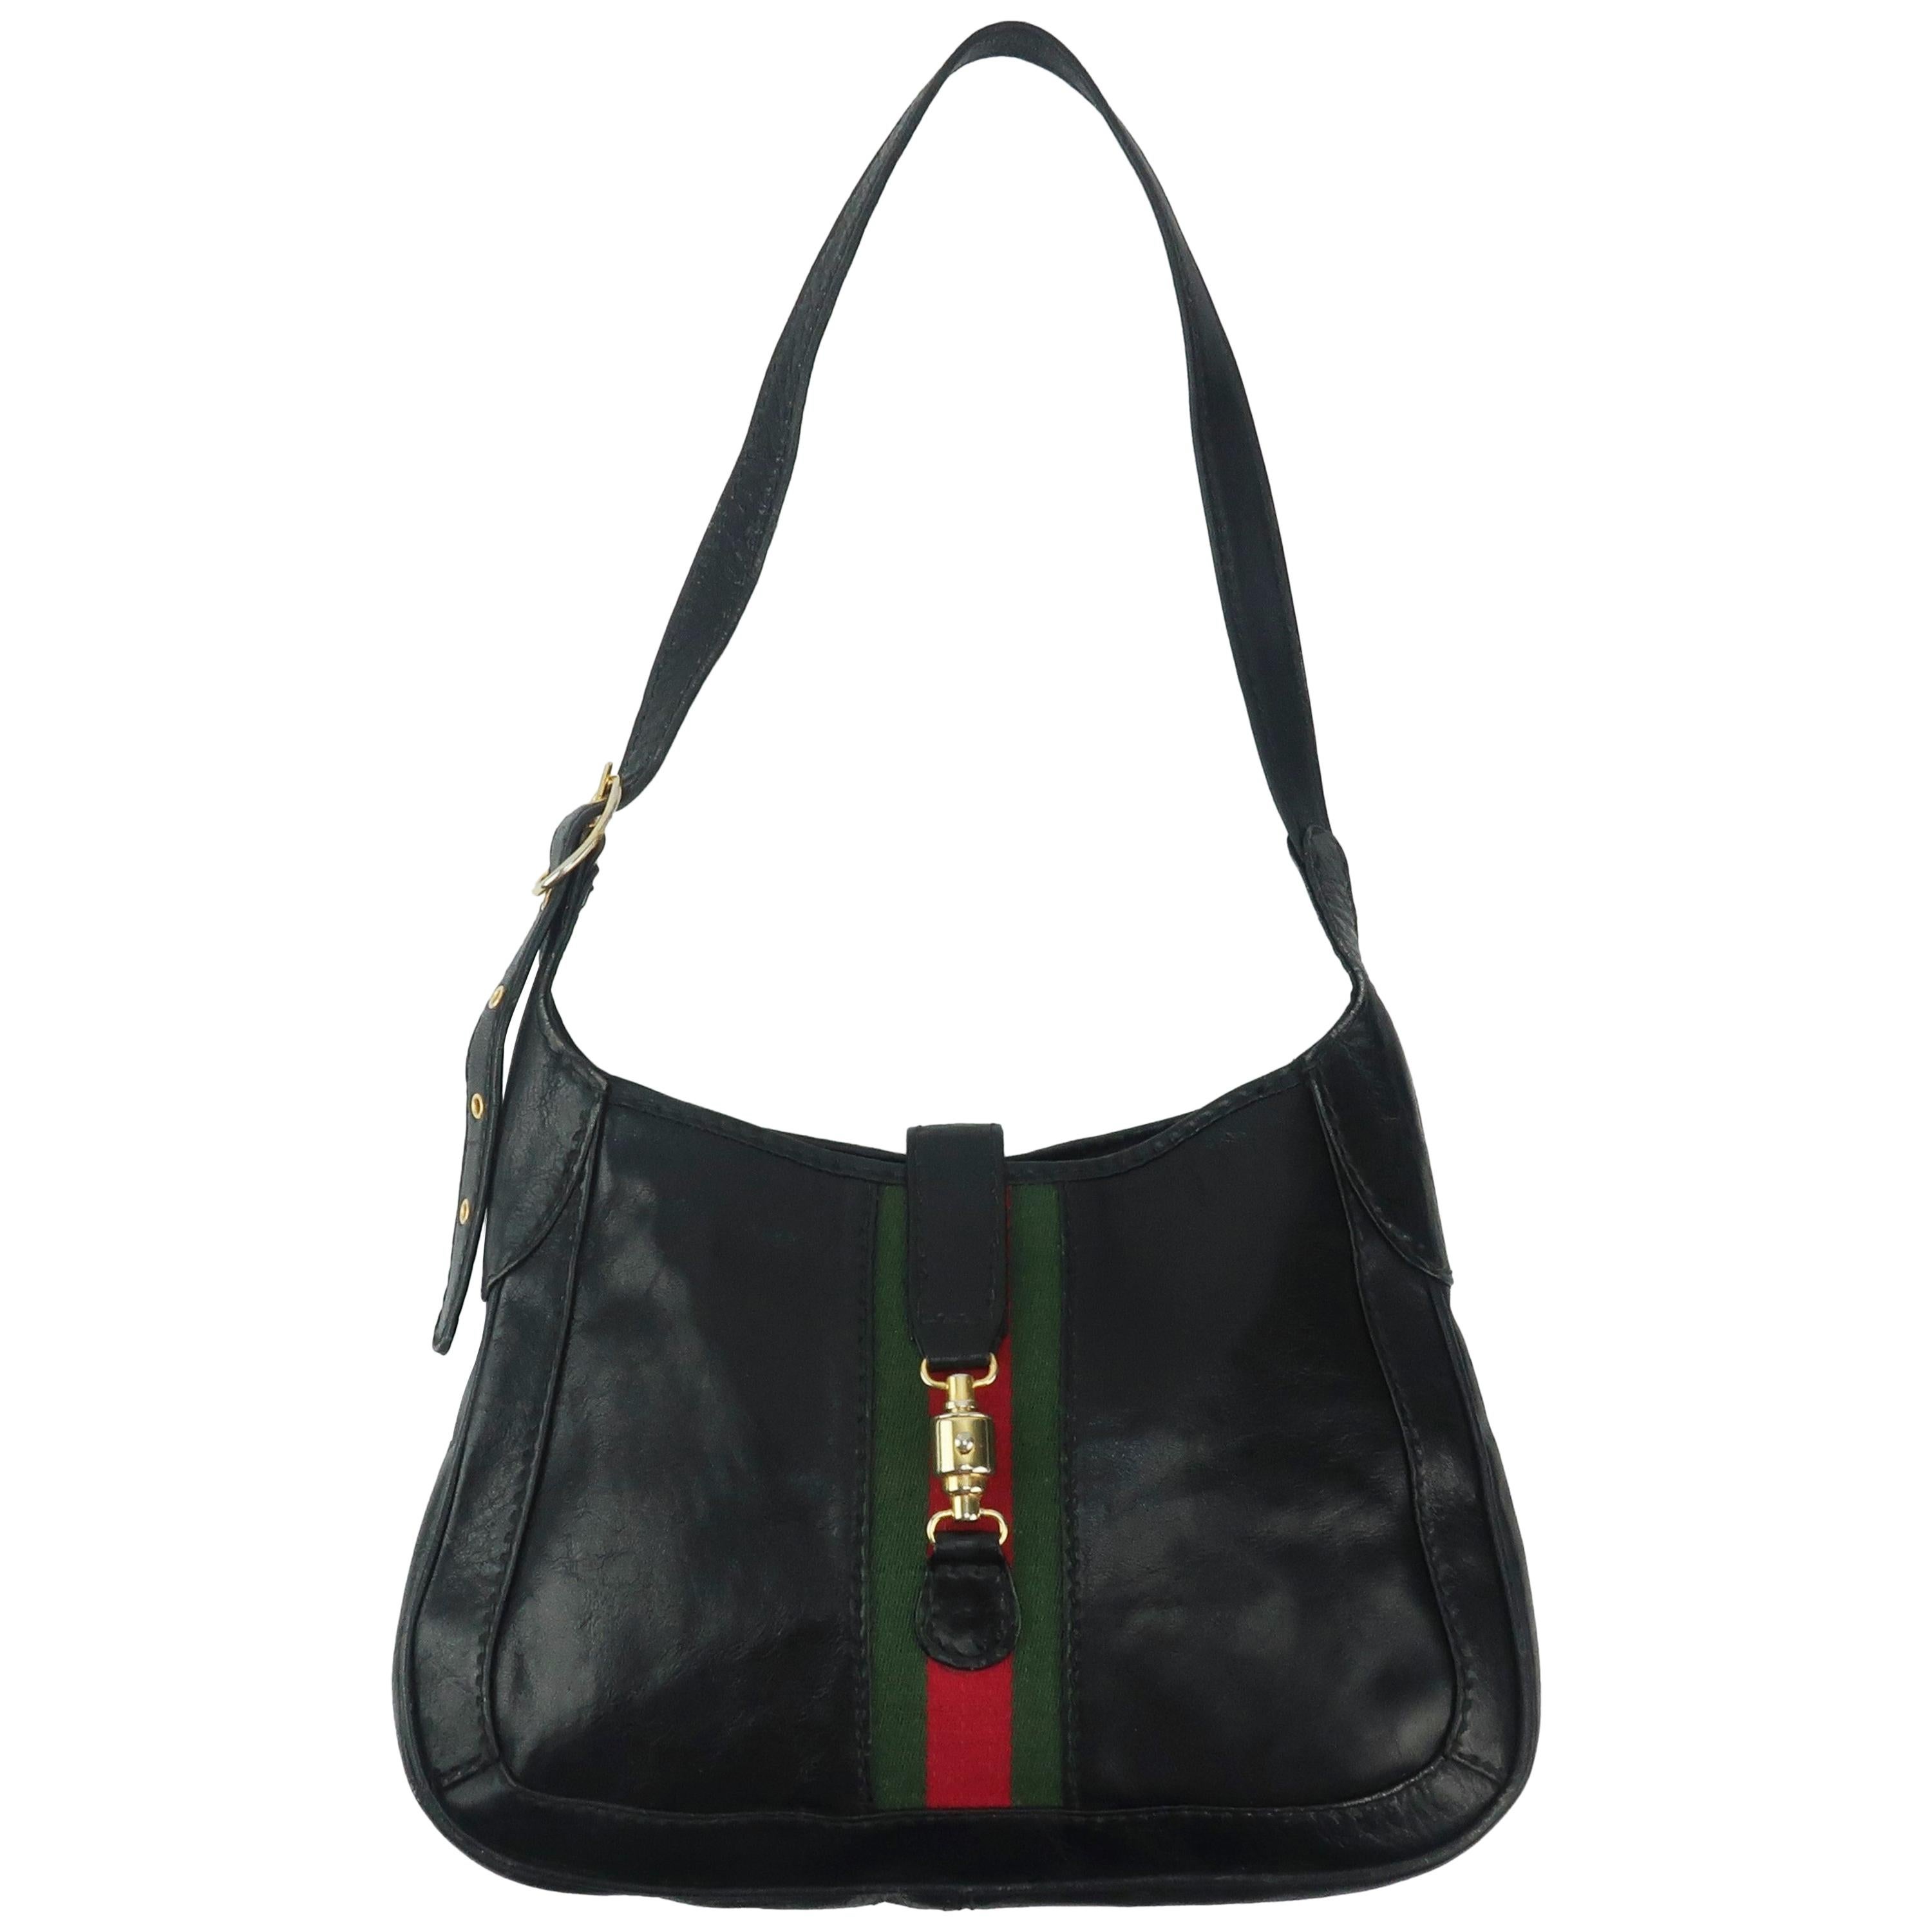 Equestrian Style Italian Black Leather Handbag For Neiman Marcus, C.1970